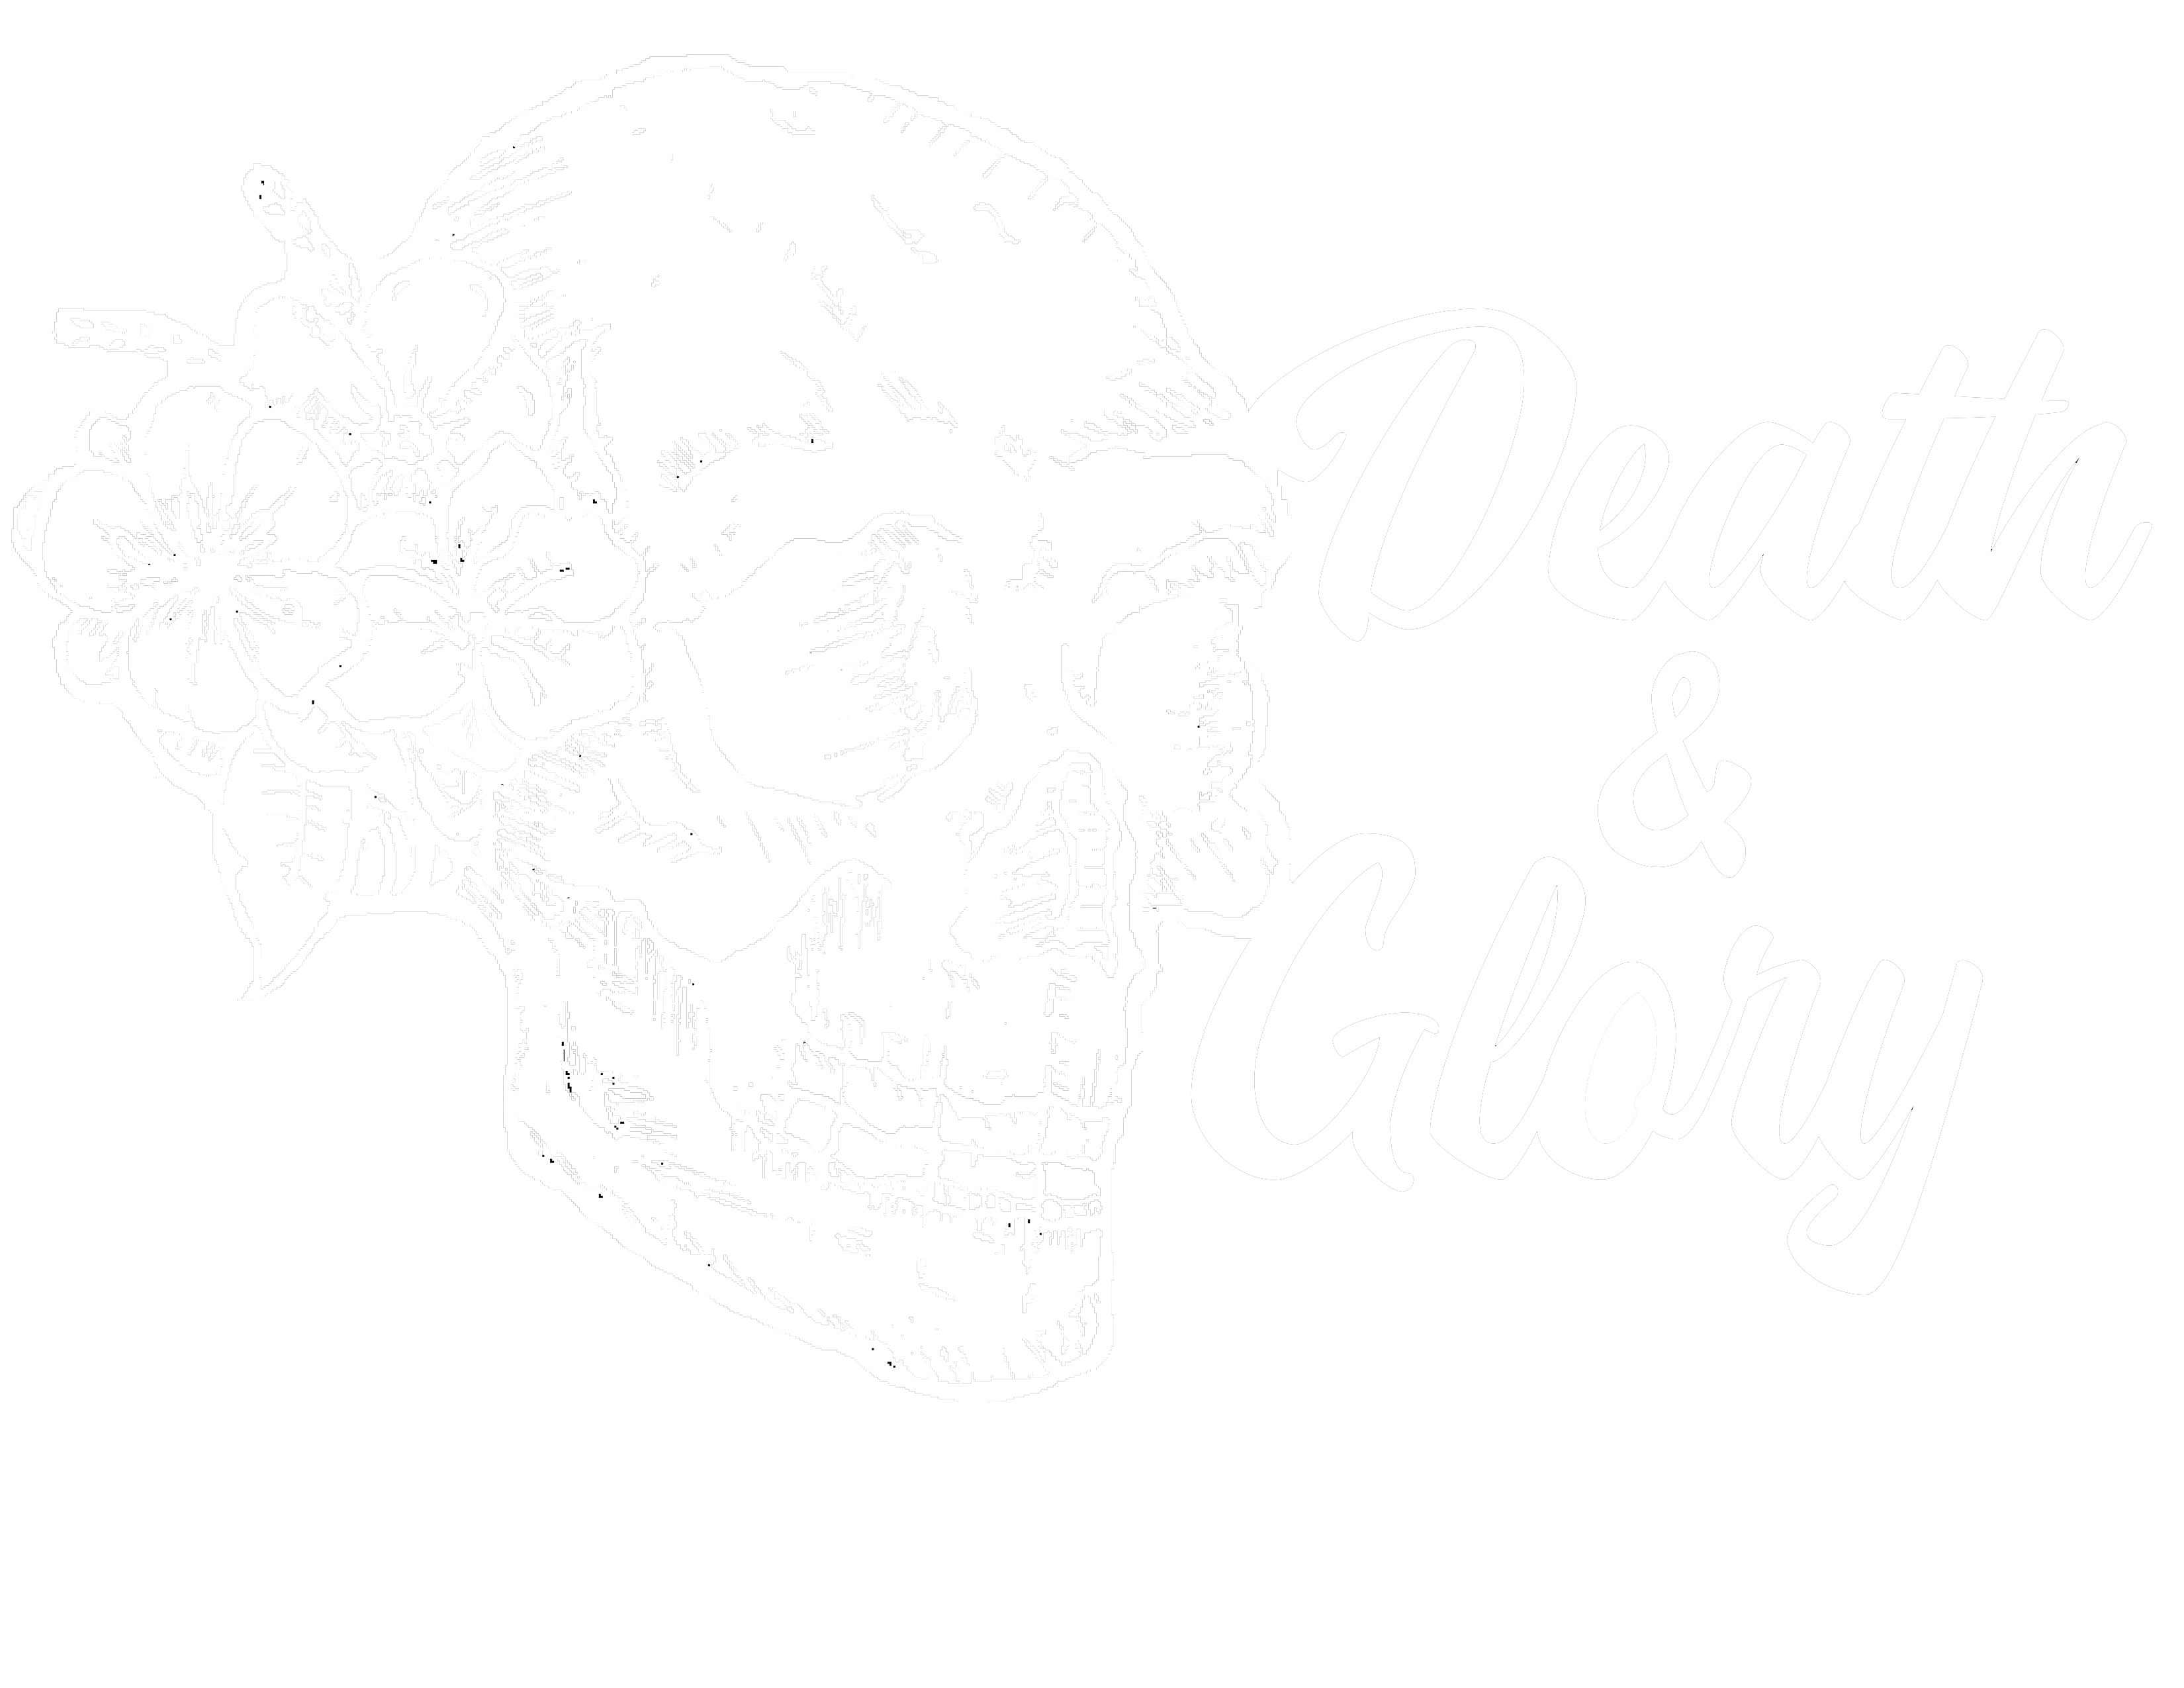 Death and Glory Skate Shop